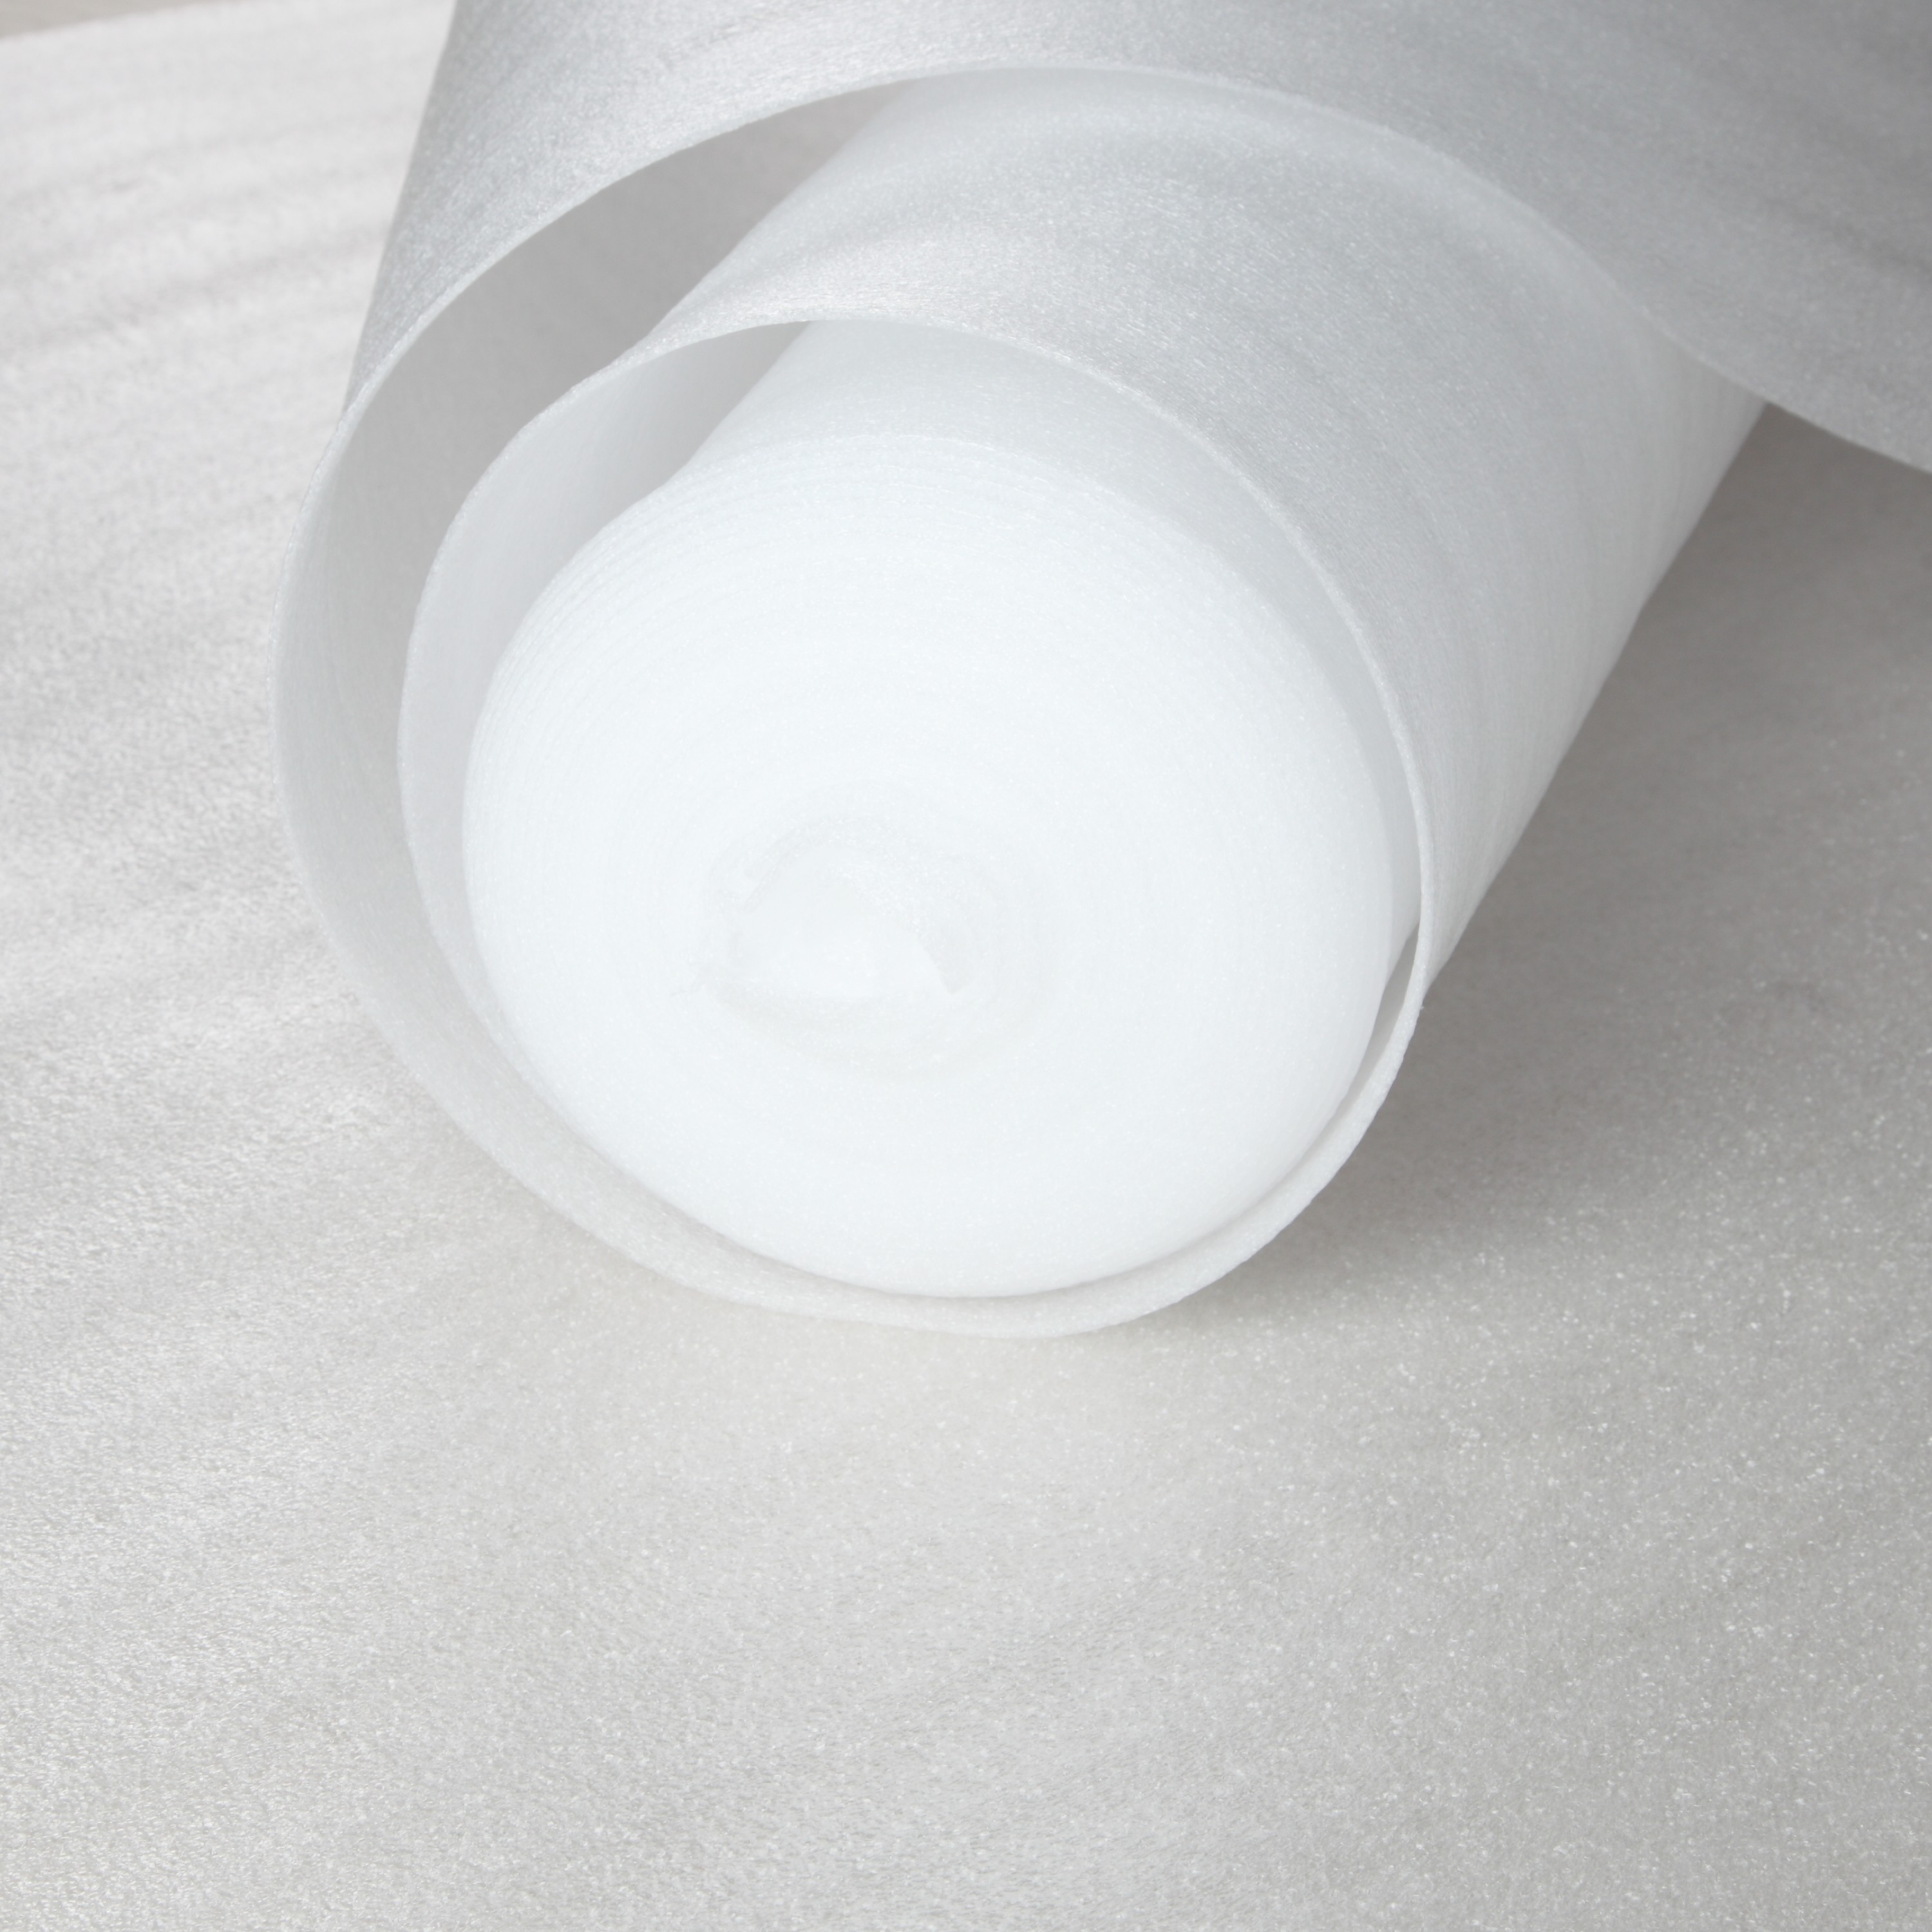 White Foam Laminate Flooring Underlay - 50% OFF! Fast UK Delivery